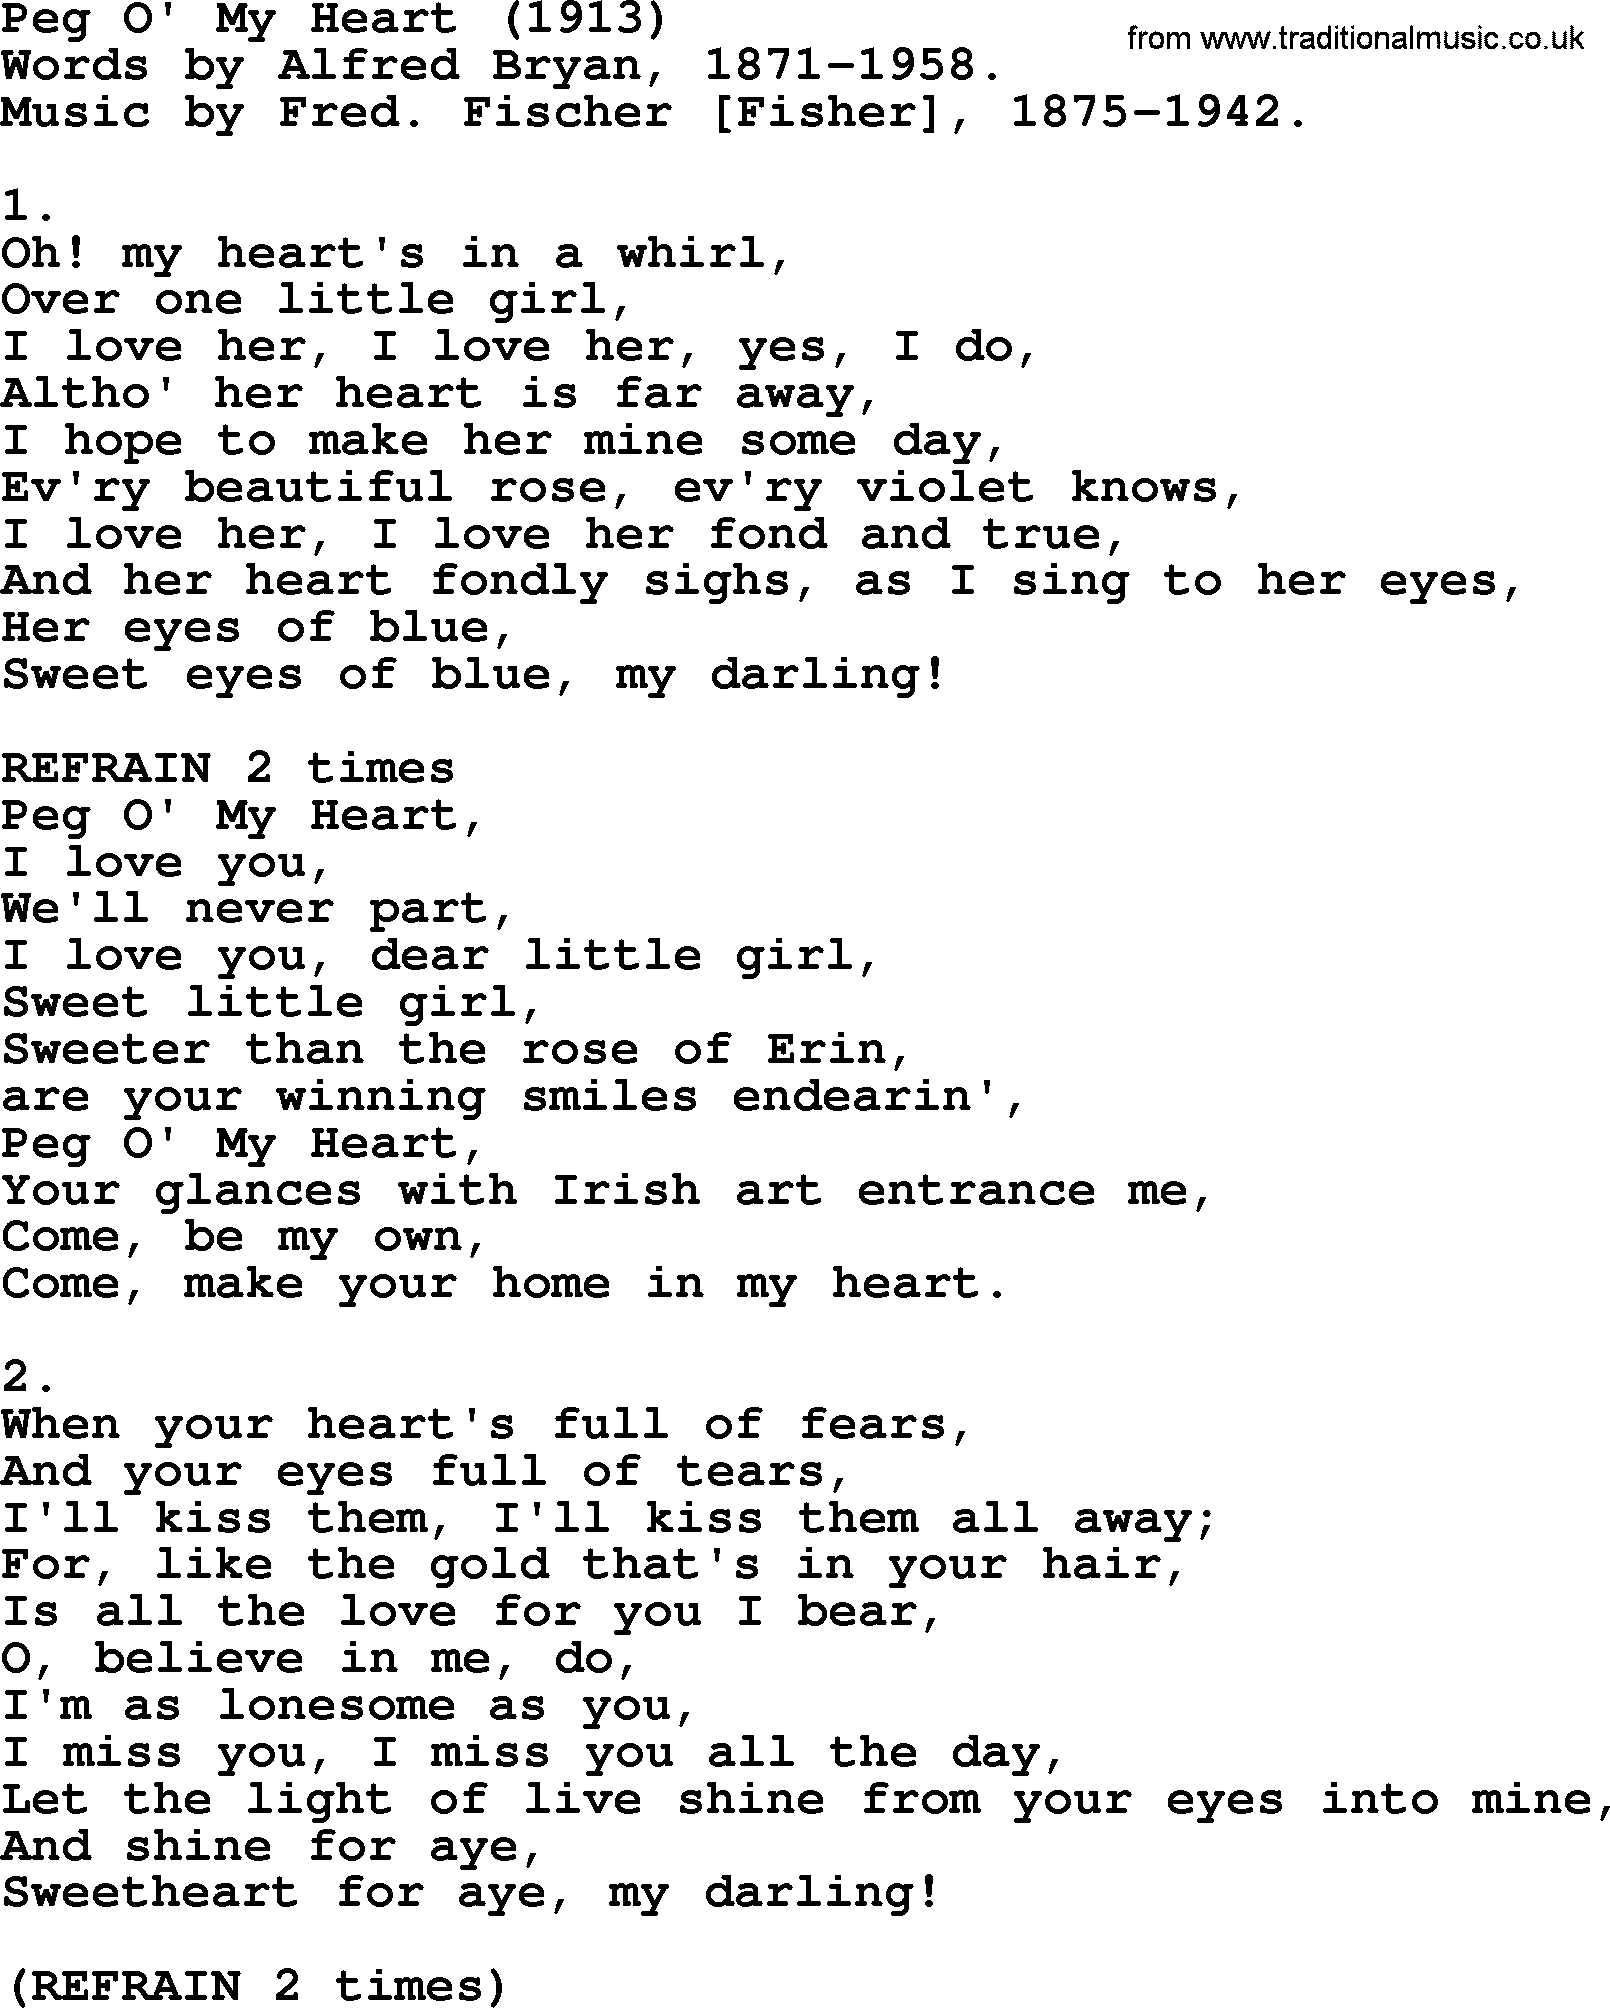 World War(WW1) One Song: Peg O' My Heart 1913, lyrics and PDF